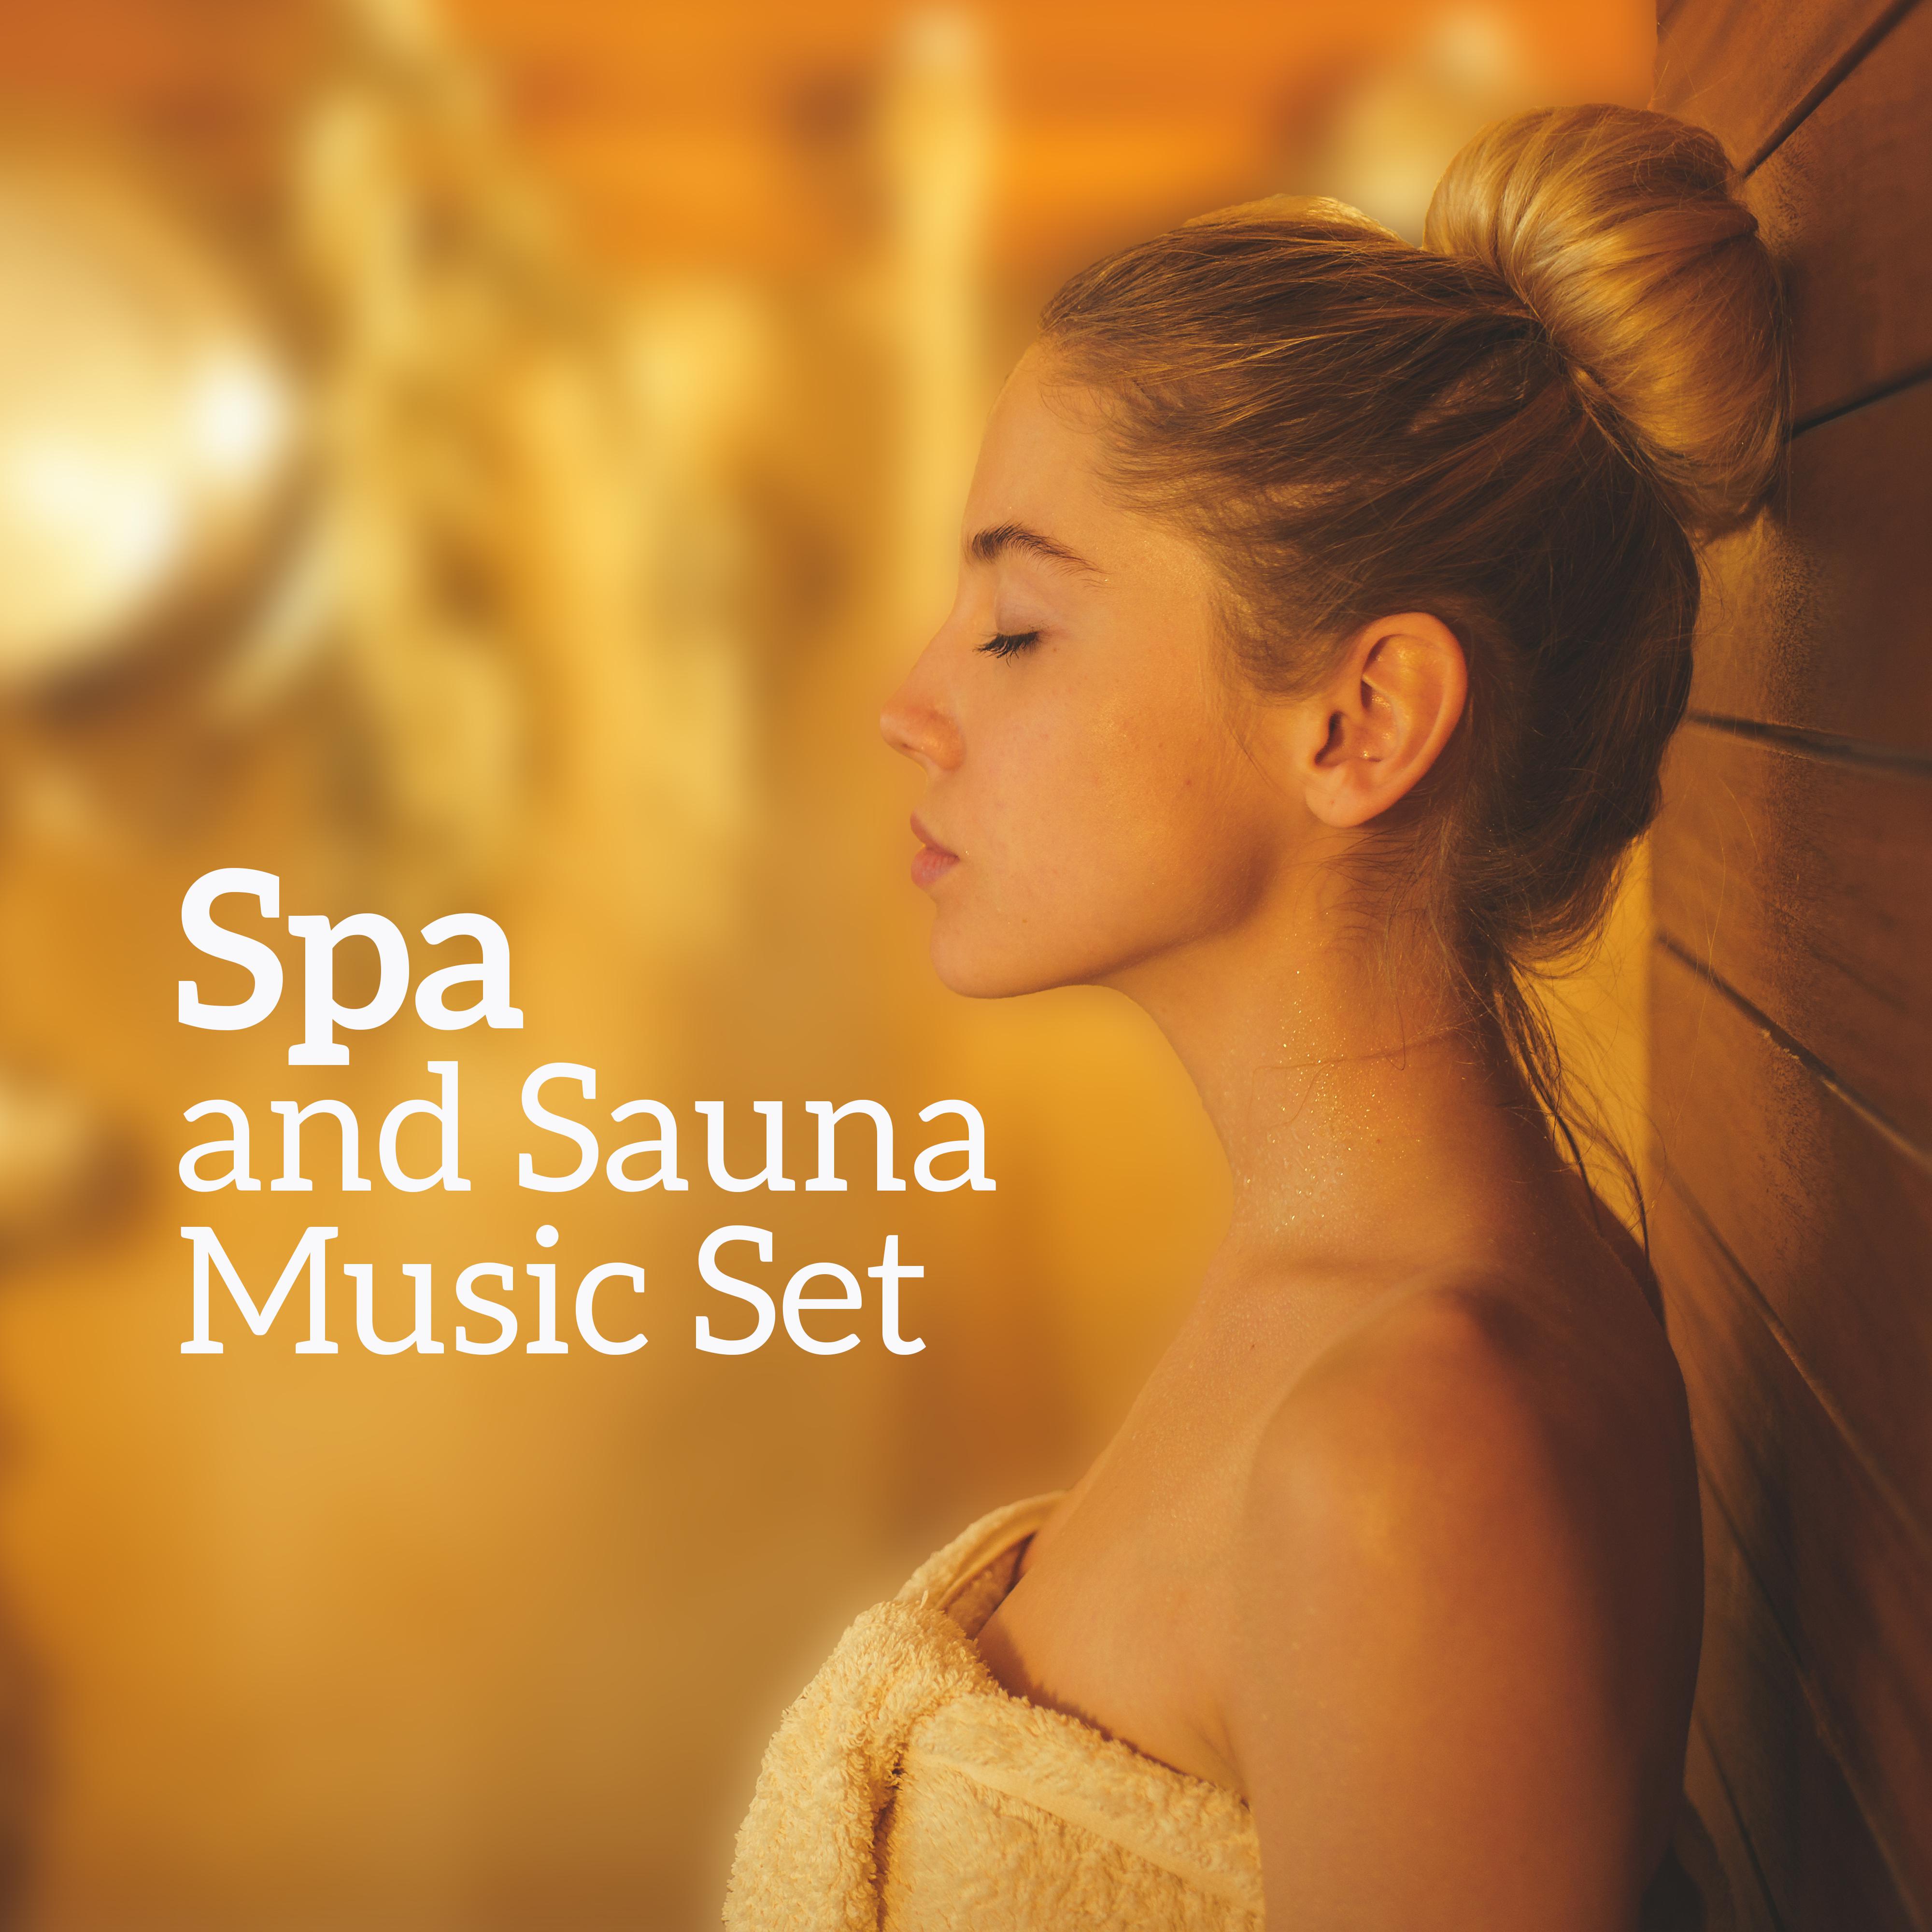 Spa and Sauna Music Set